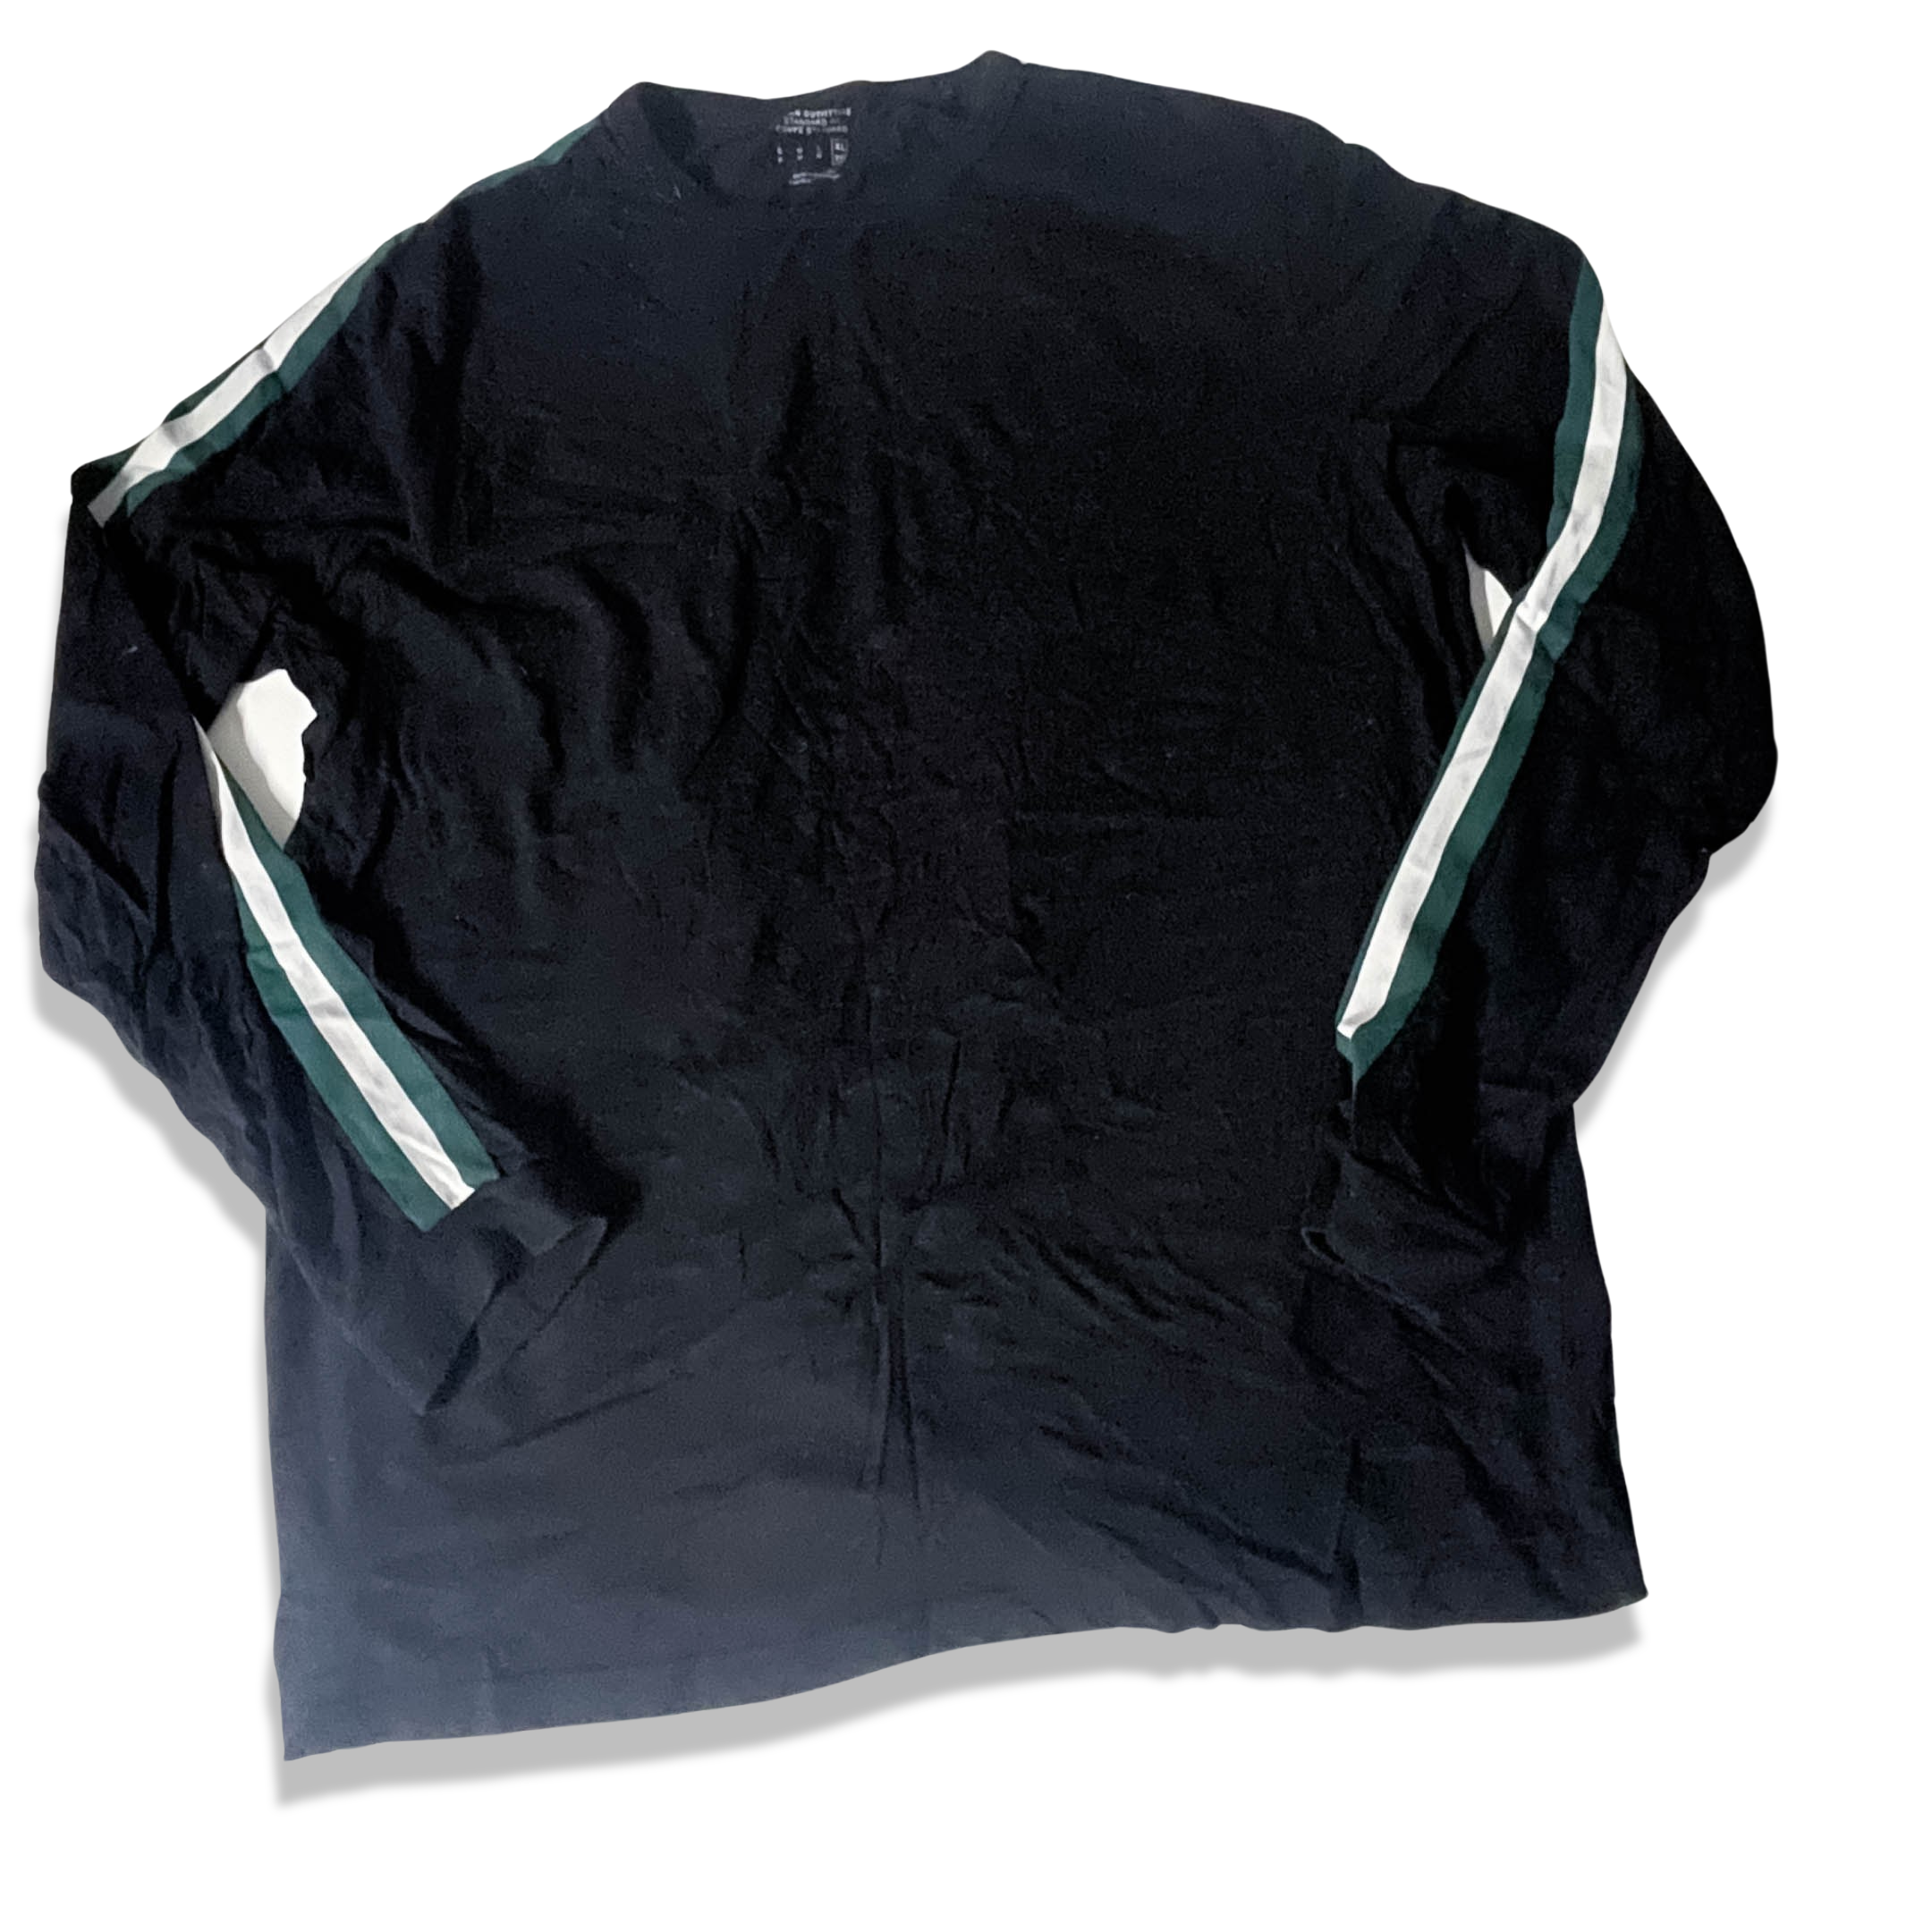 Vintage American Eagle Outfitter standard fit mens black sweatshirt XL